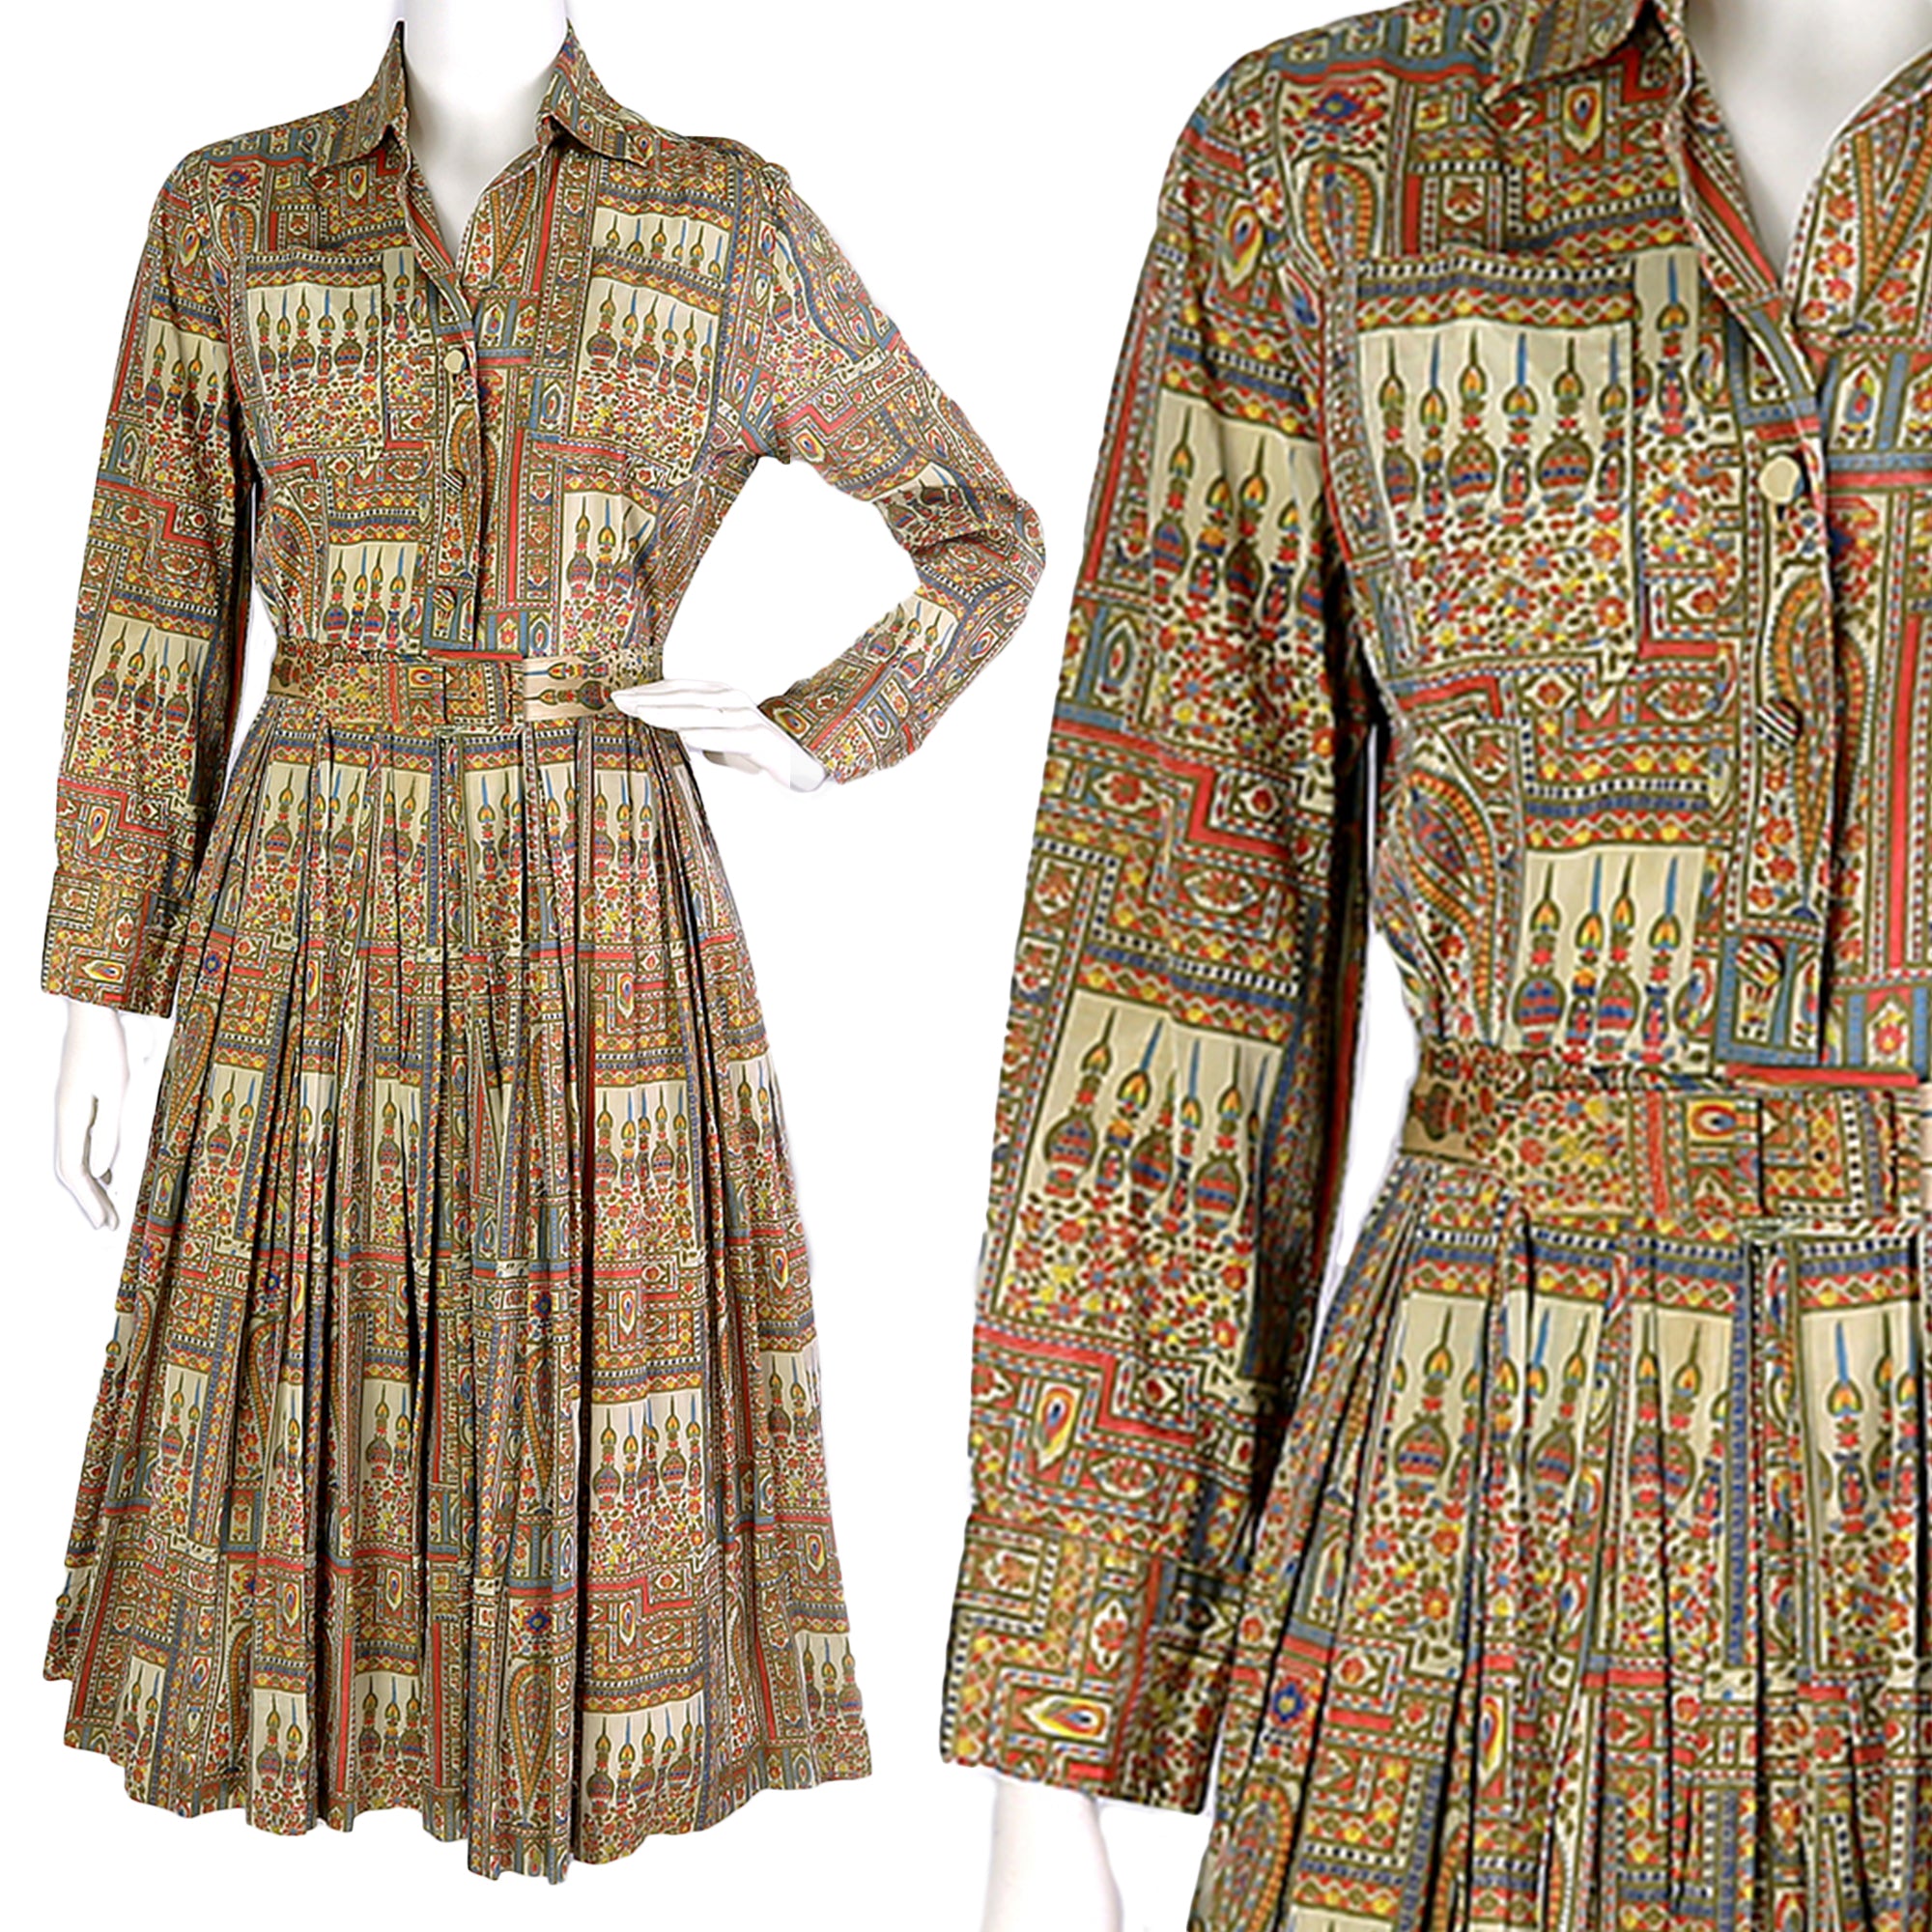 1950s Ethnic Print Cotton Dress